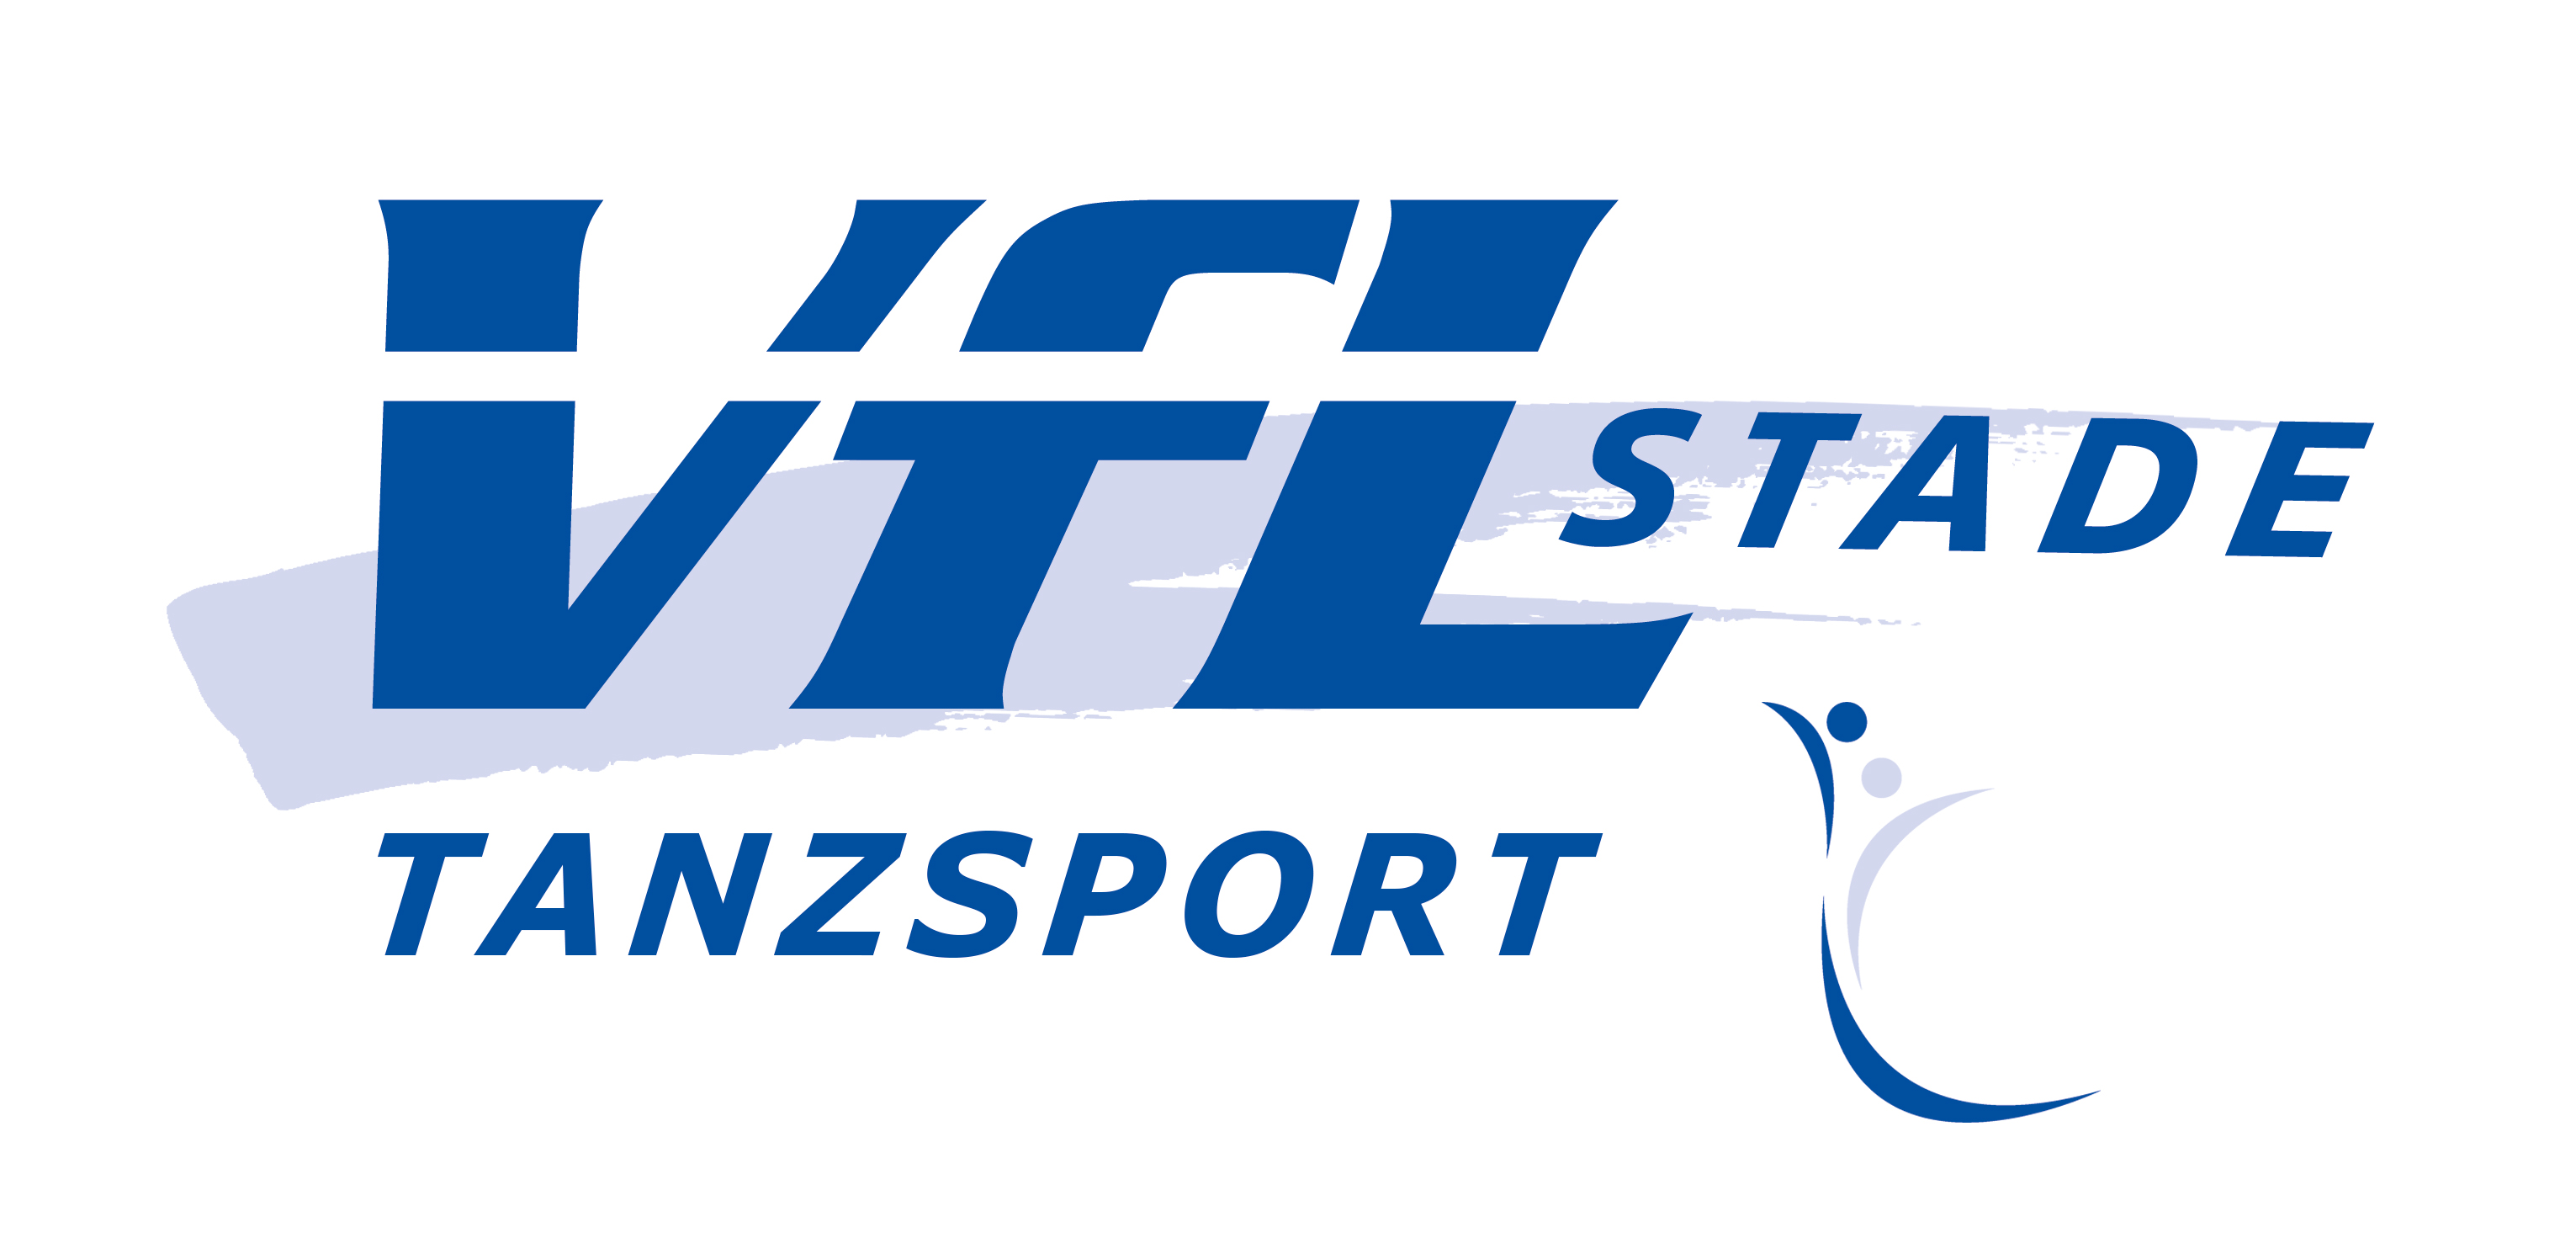 Abteilungslogos_VfL/Tanzsport_logo.jpg